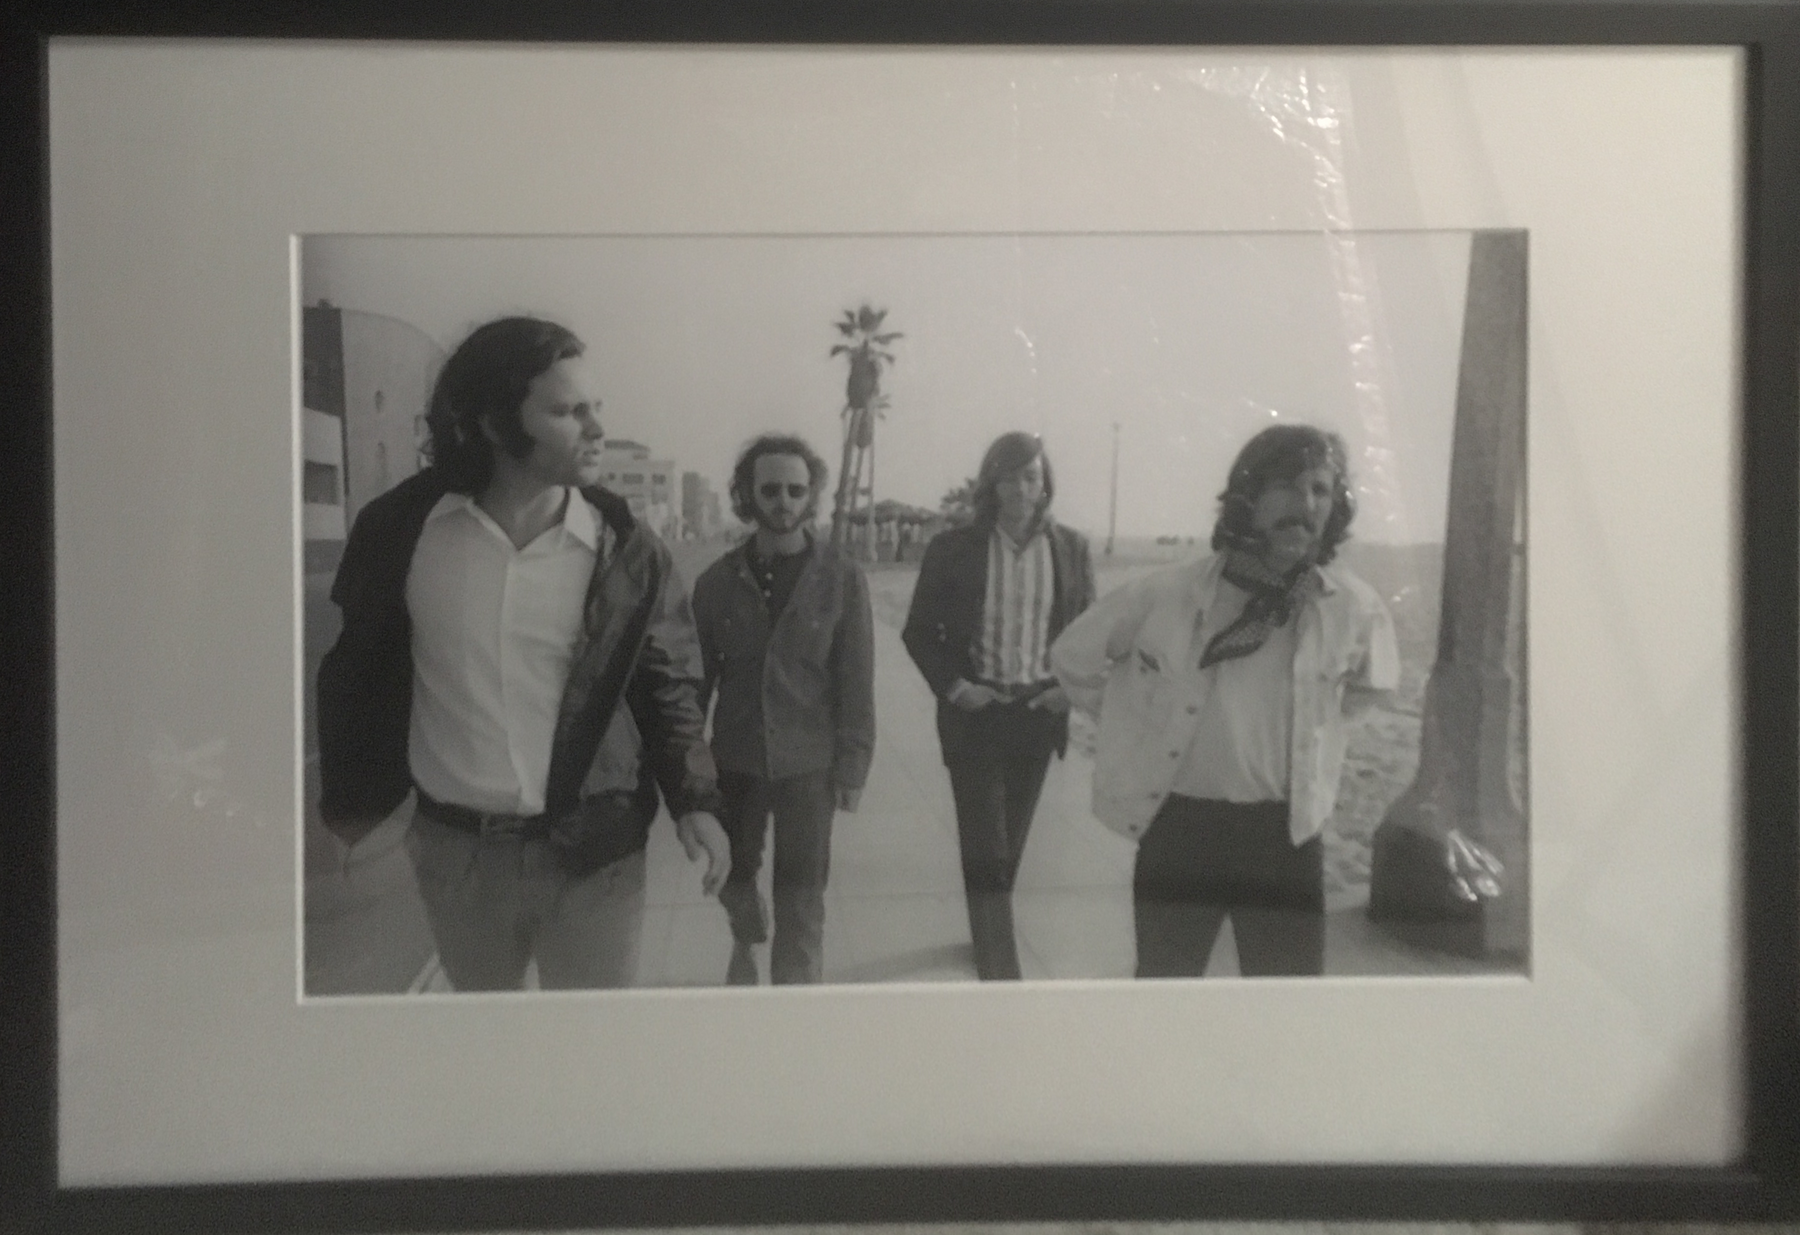 The Doors - Venice Beach 1969 I